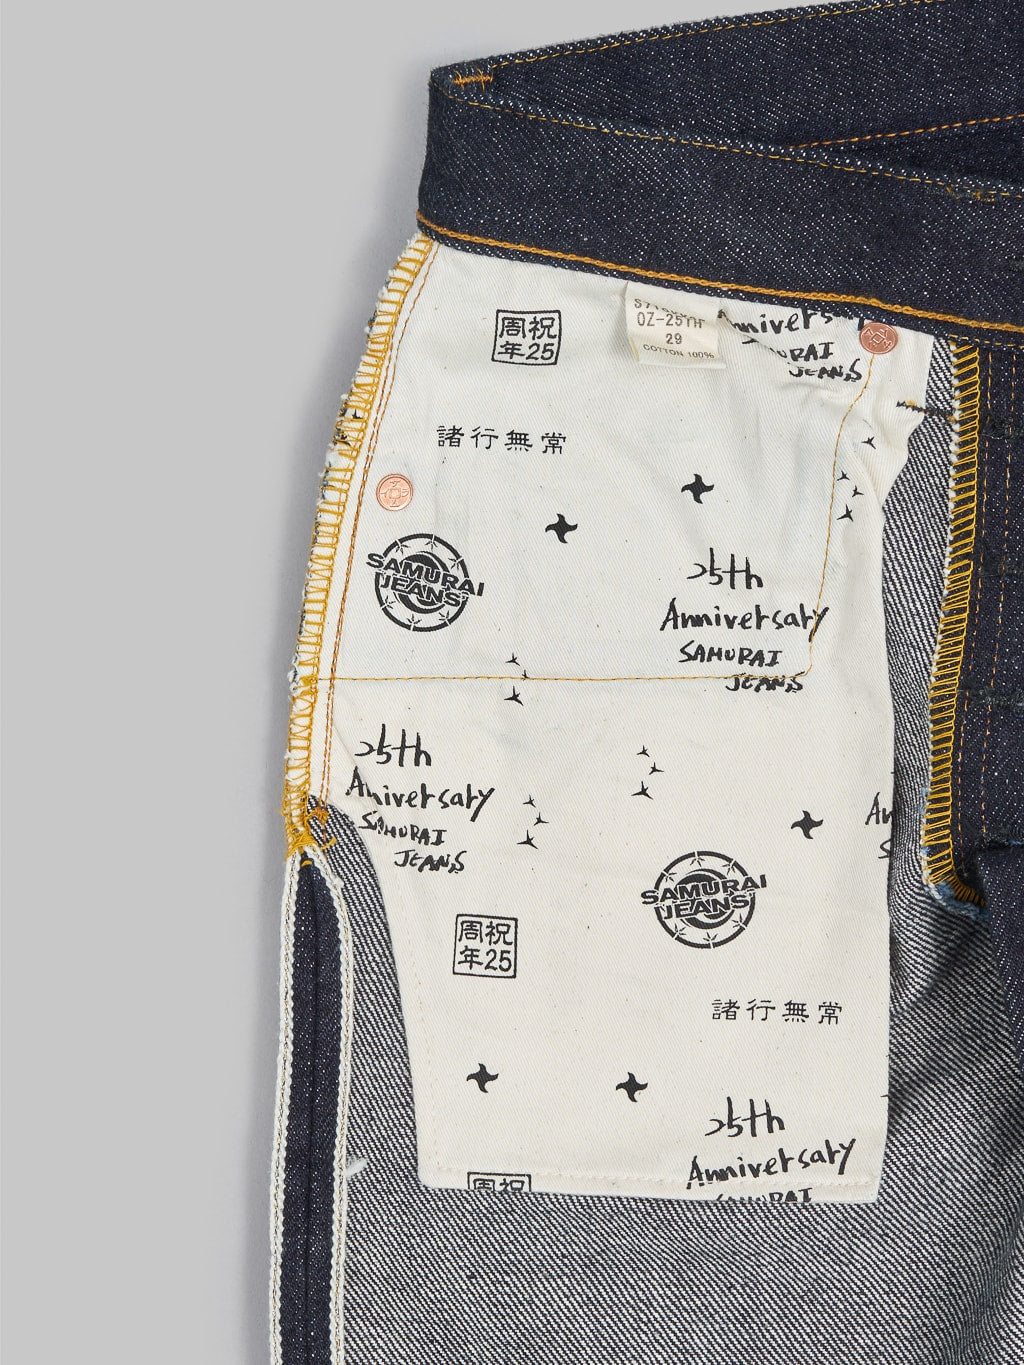 samurai jeans s710xx 25oz 25th anniversary selvedge jeans print pocket bags